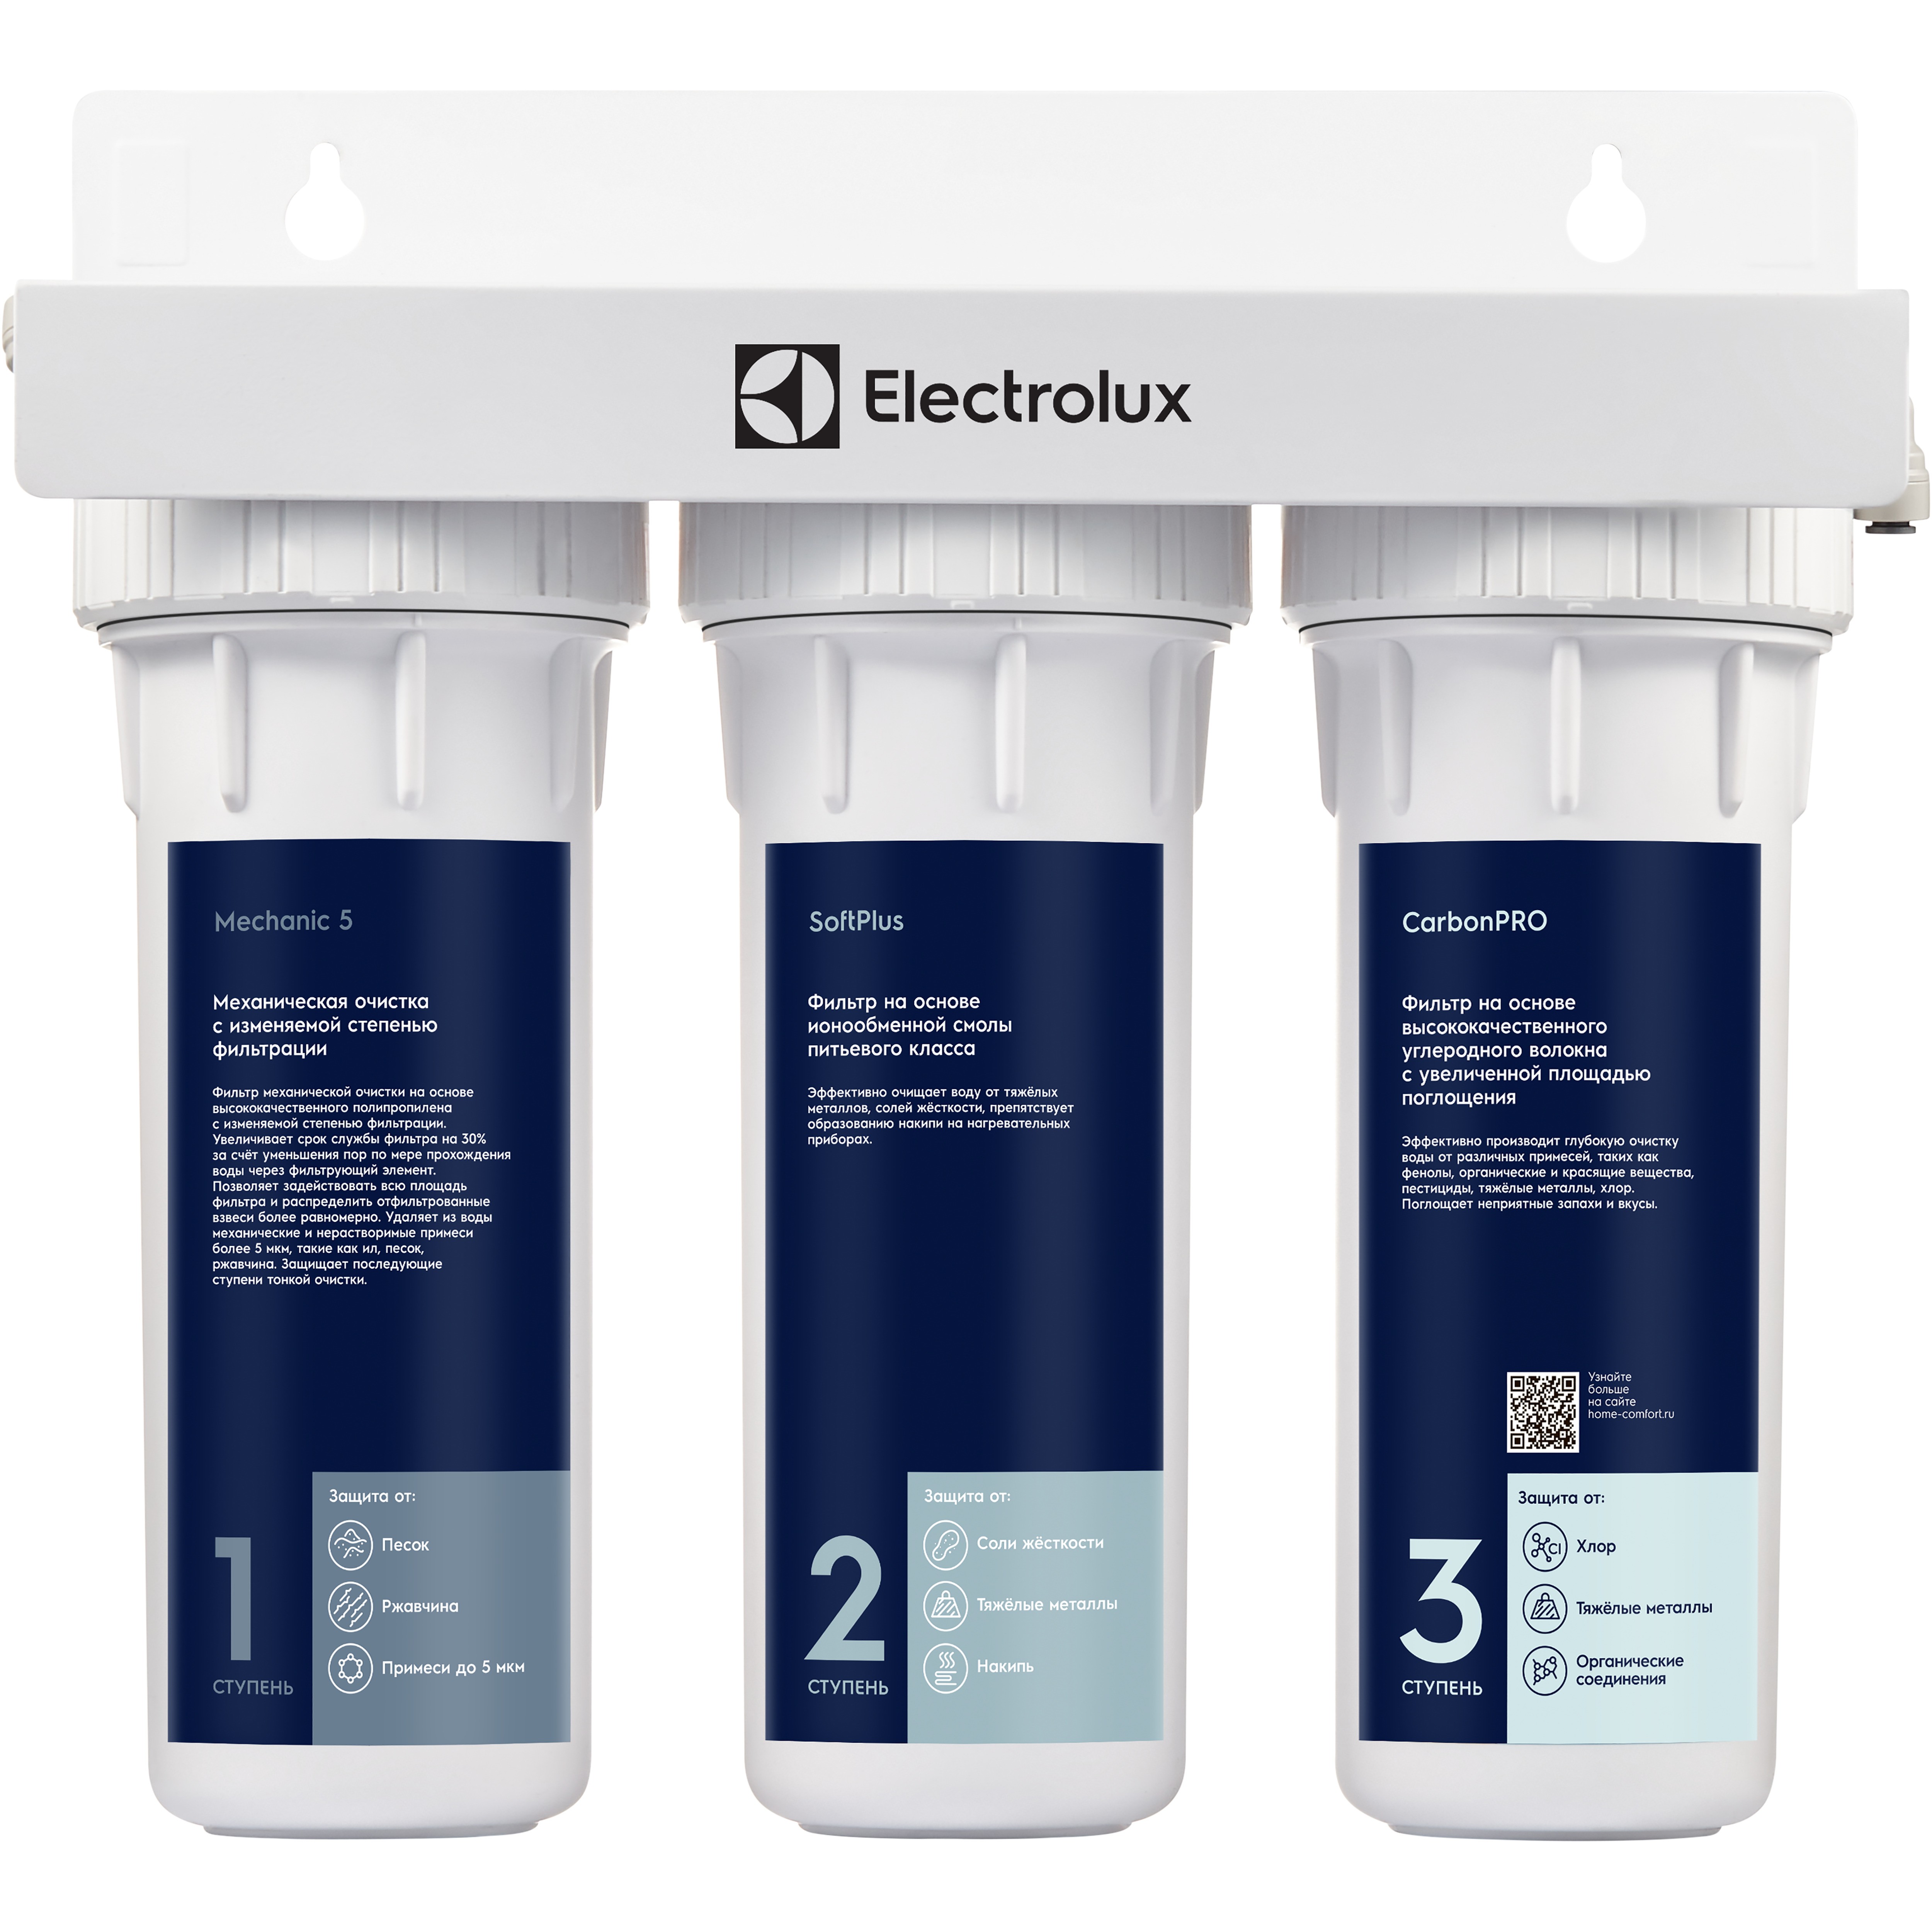 Характеристики фильтр electrolux для воды Electrolux AquaModule SF